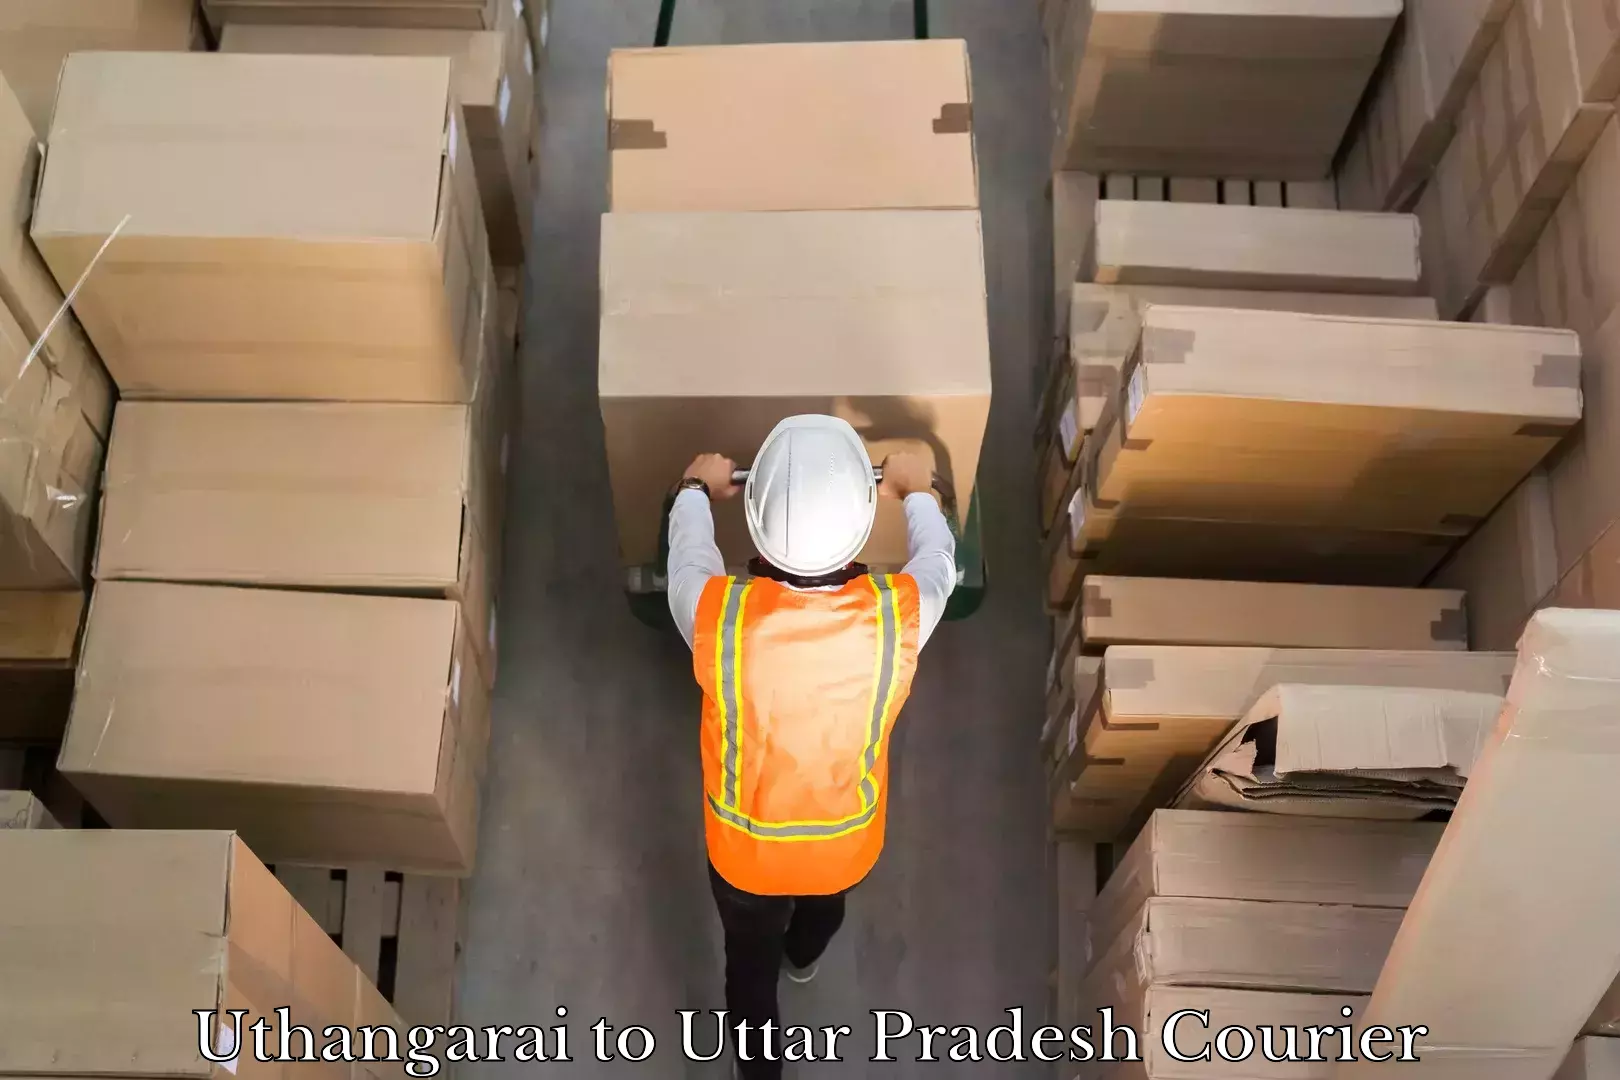 Enhanced tracking features Uthangarai to Uttar Pradesh